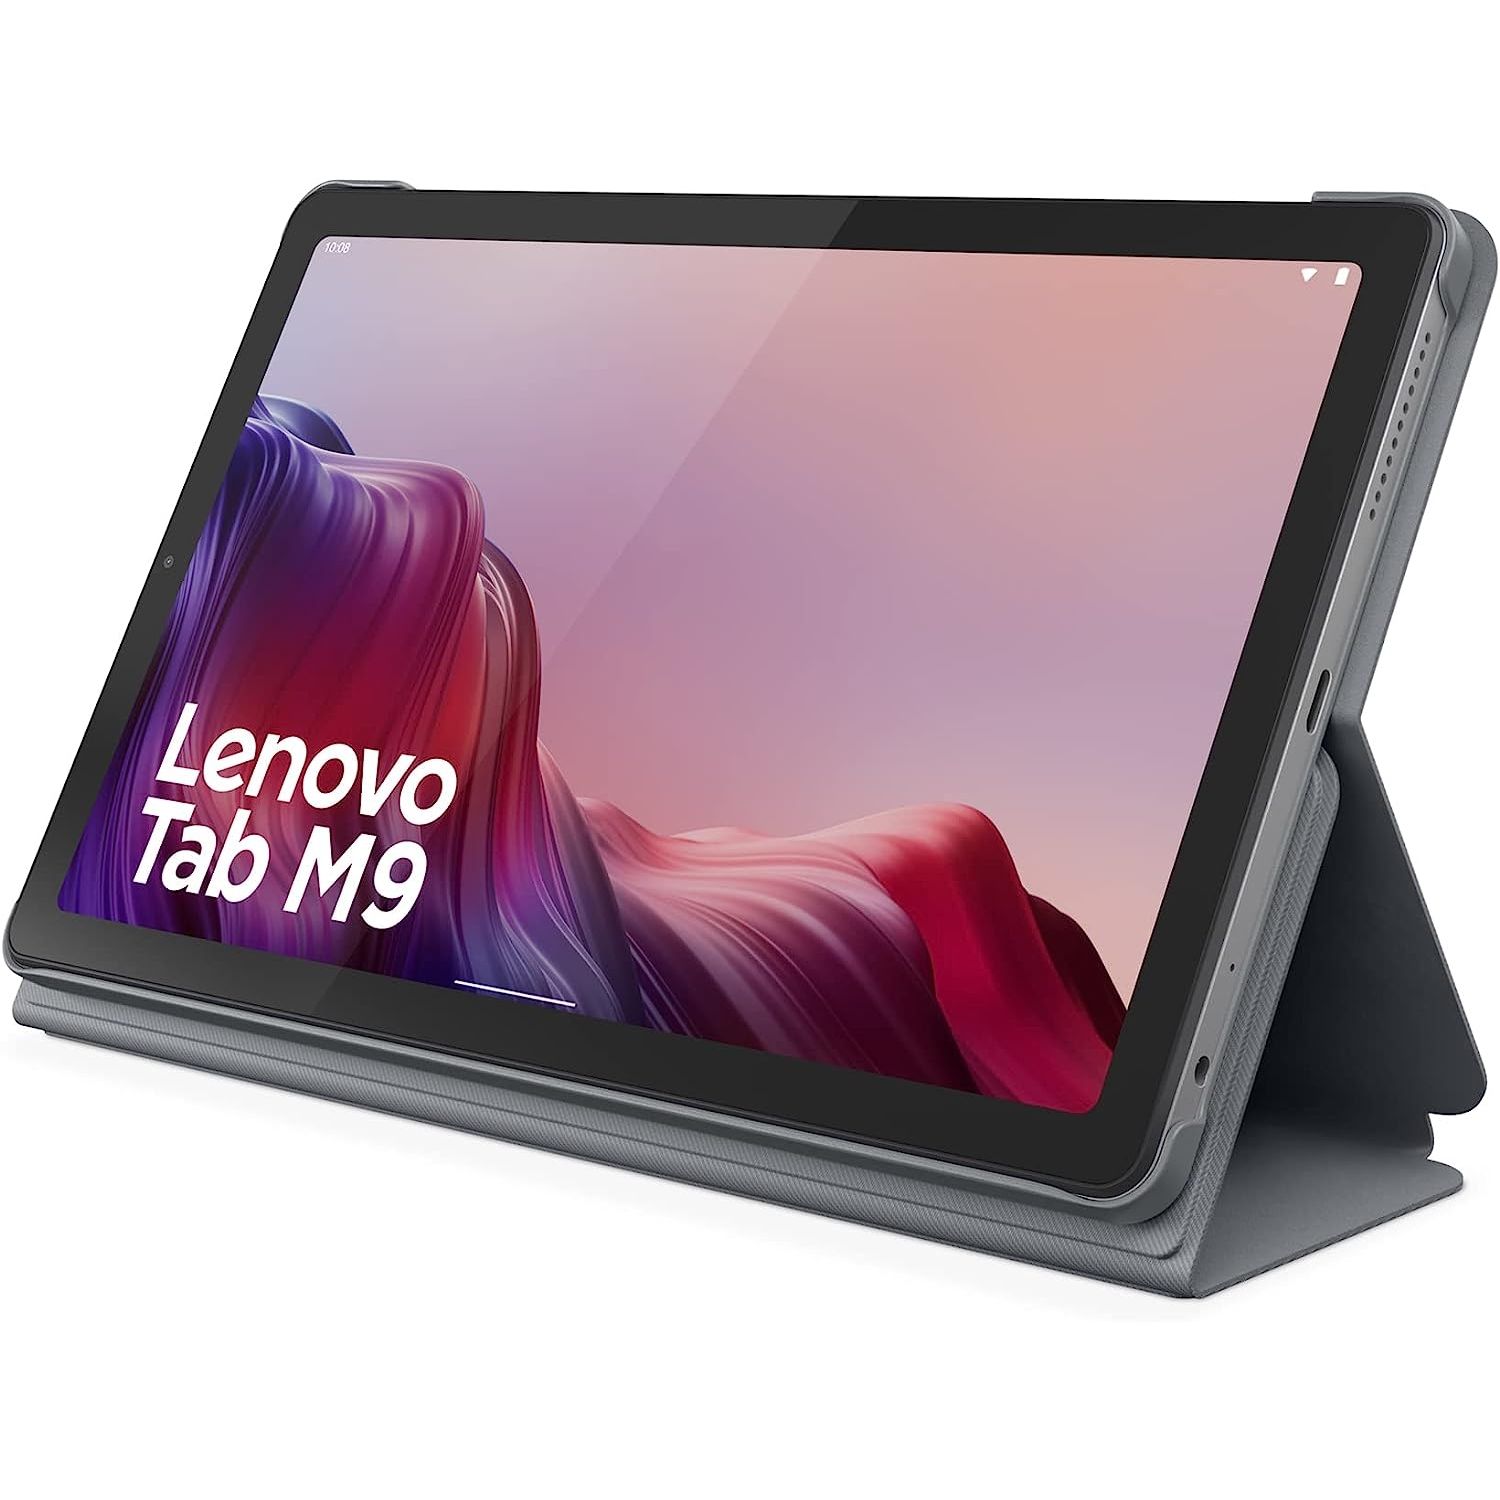 lenovo tablet 10 inch - Best Buy